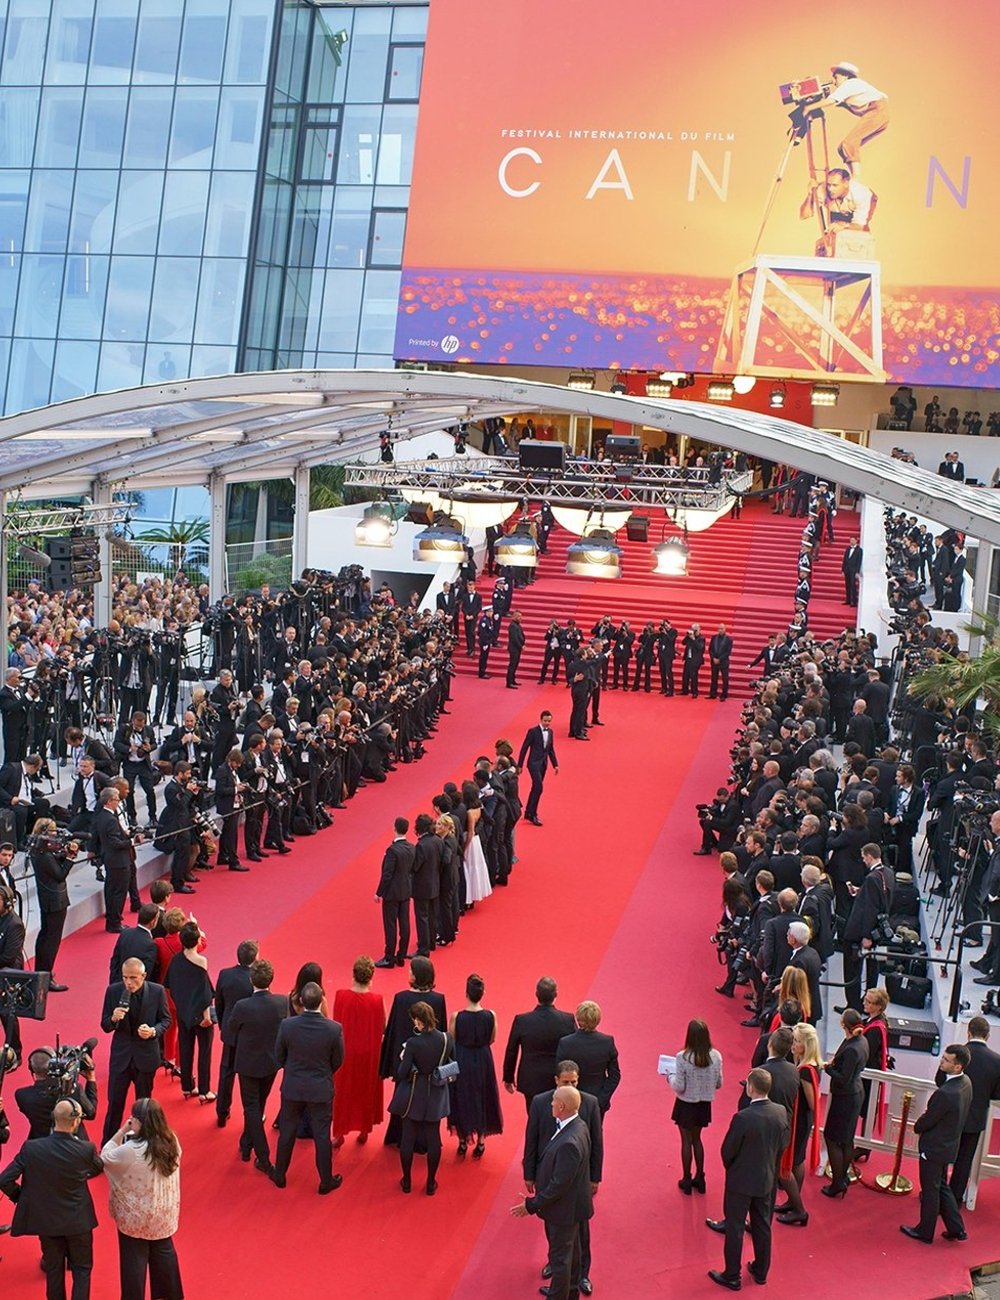 Festival de Cannes - Festival de Cannes - Festival de Cannes - Festival de Cannes - Festival de Cannes - https://stealthelook.com.br